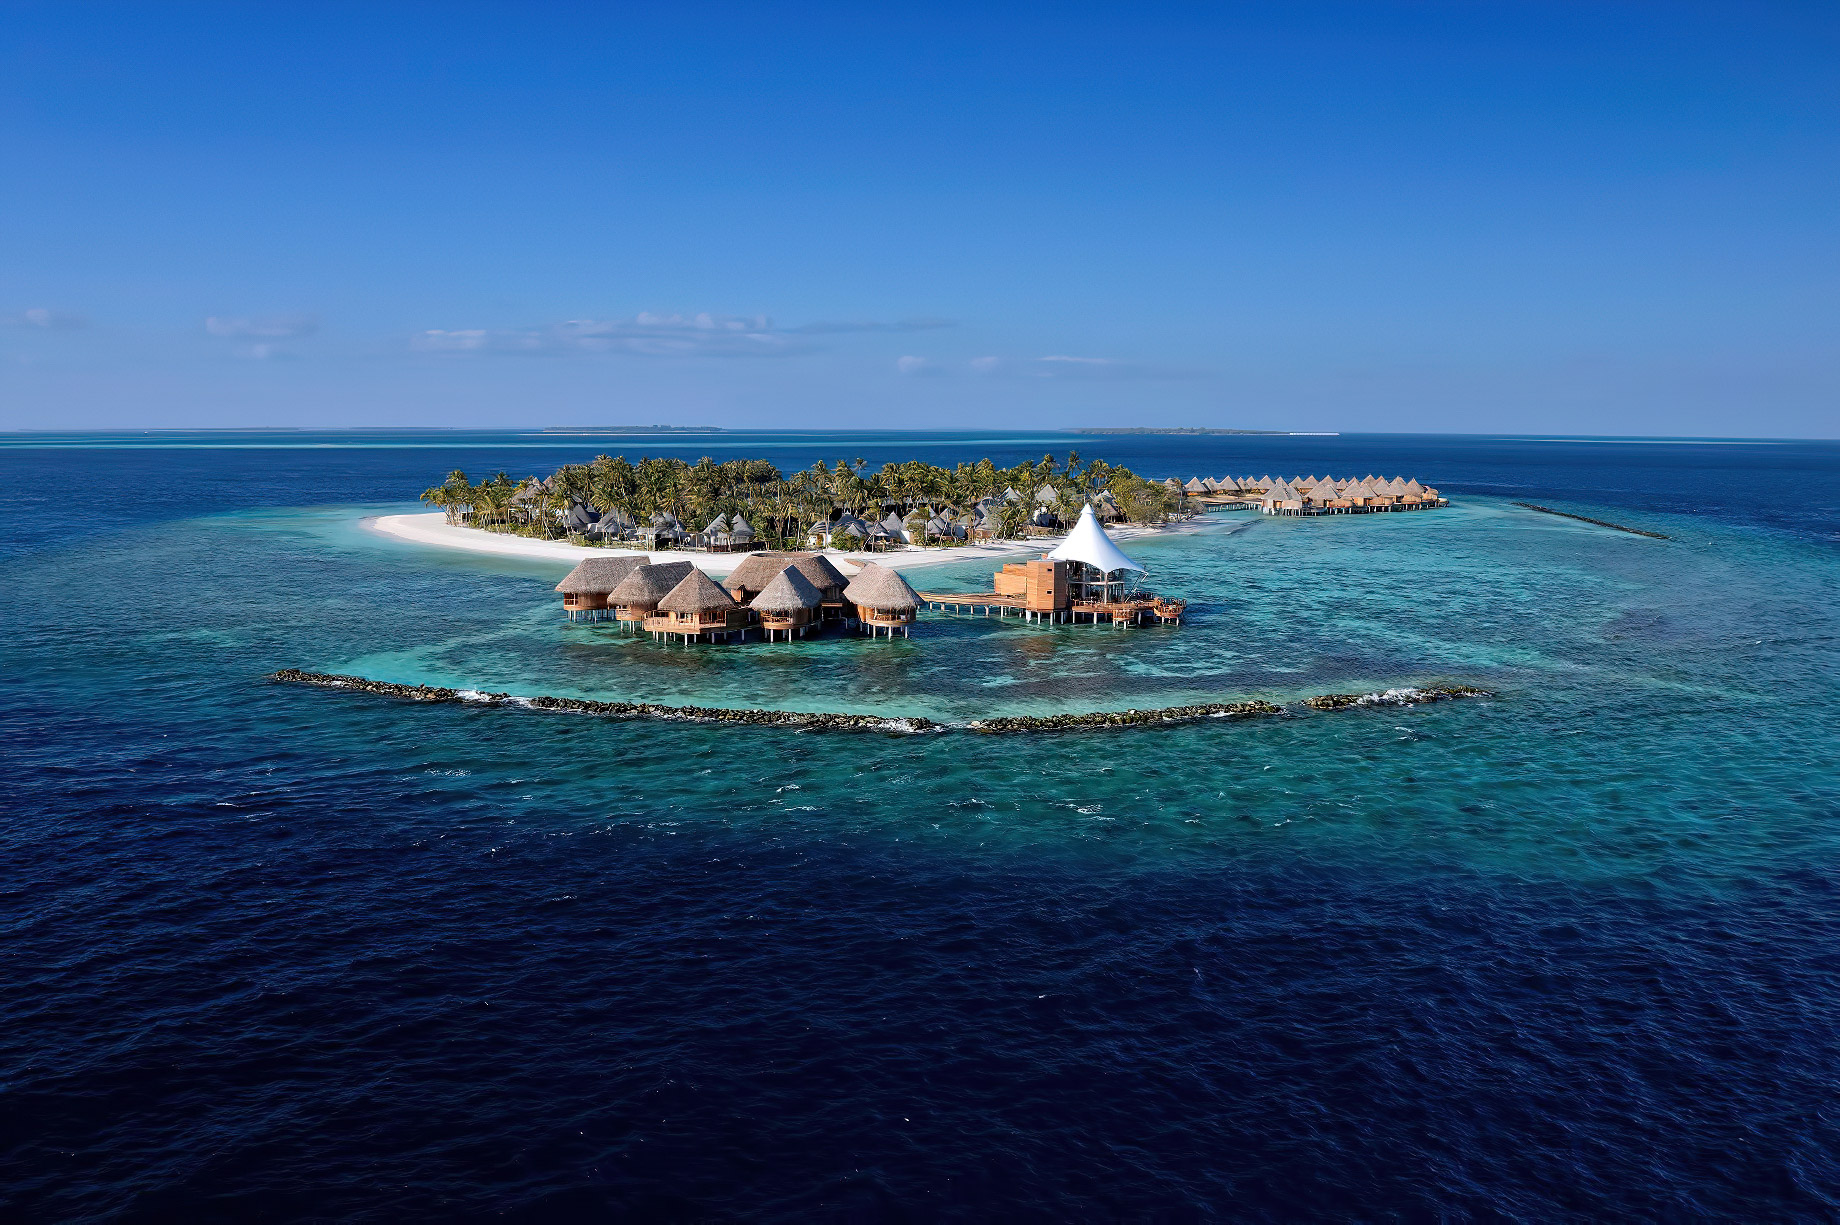 The Nautilus Maldives Resort - Thiladhoo Island, Maldives - Aerial View